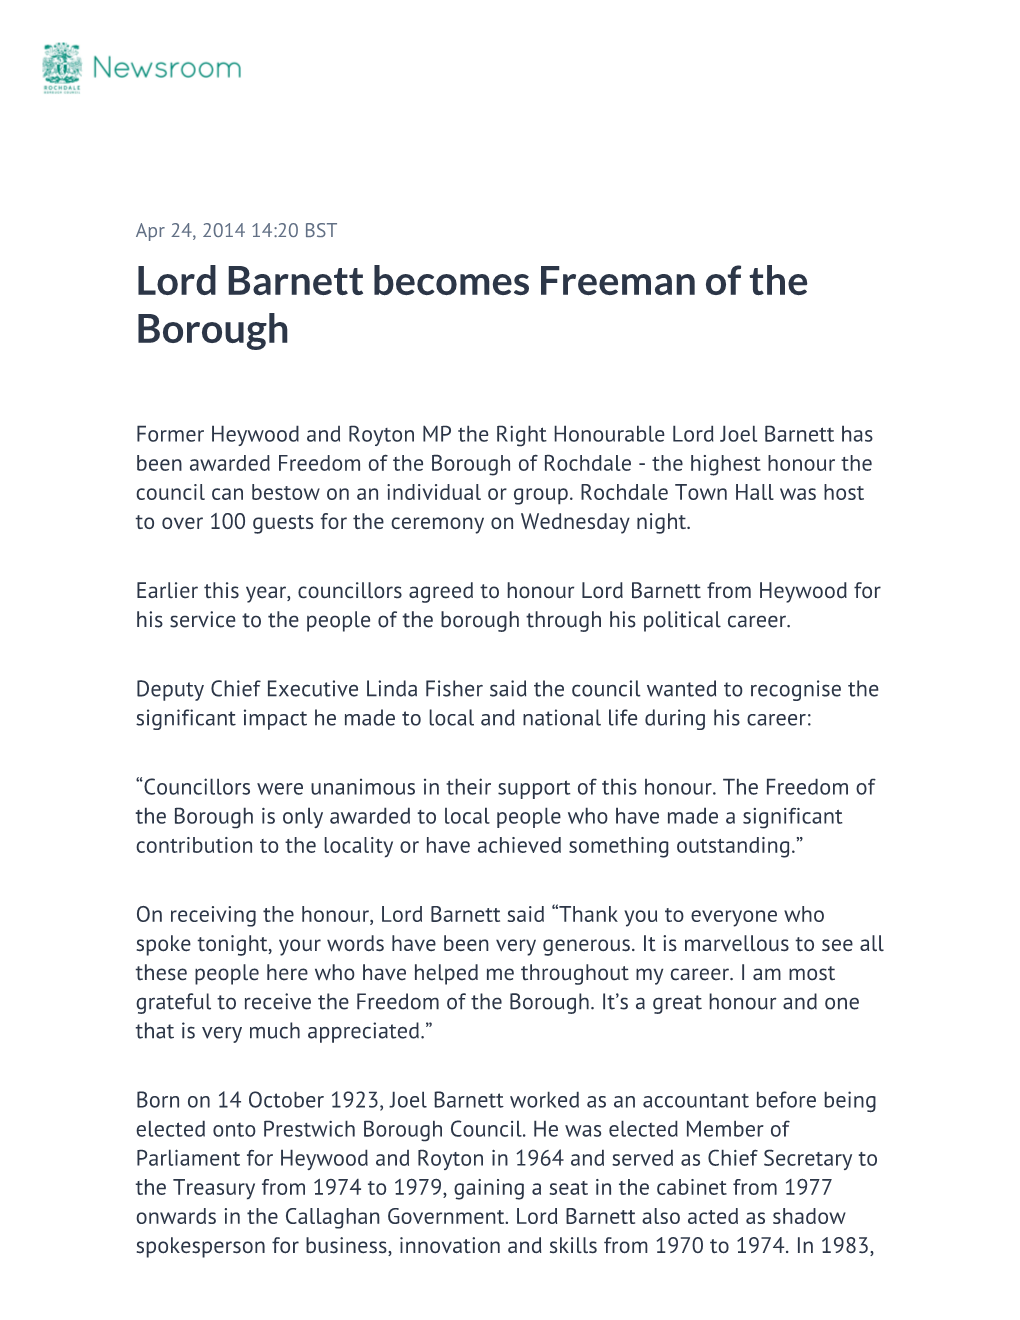 Lord Barnett Becomes Freeman of the Borough